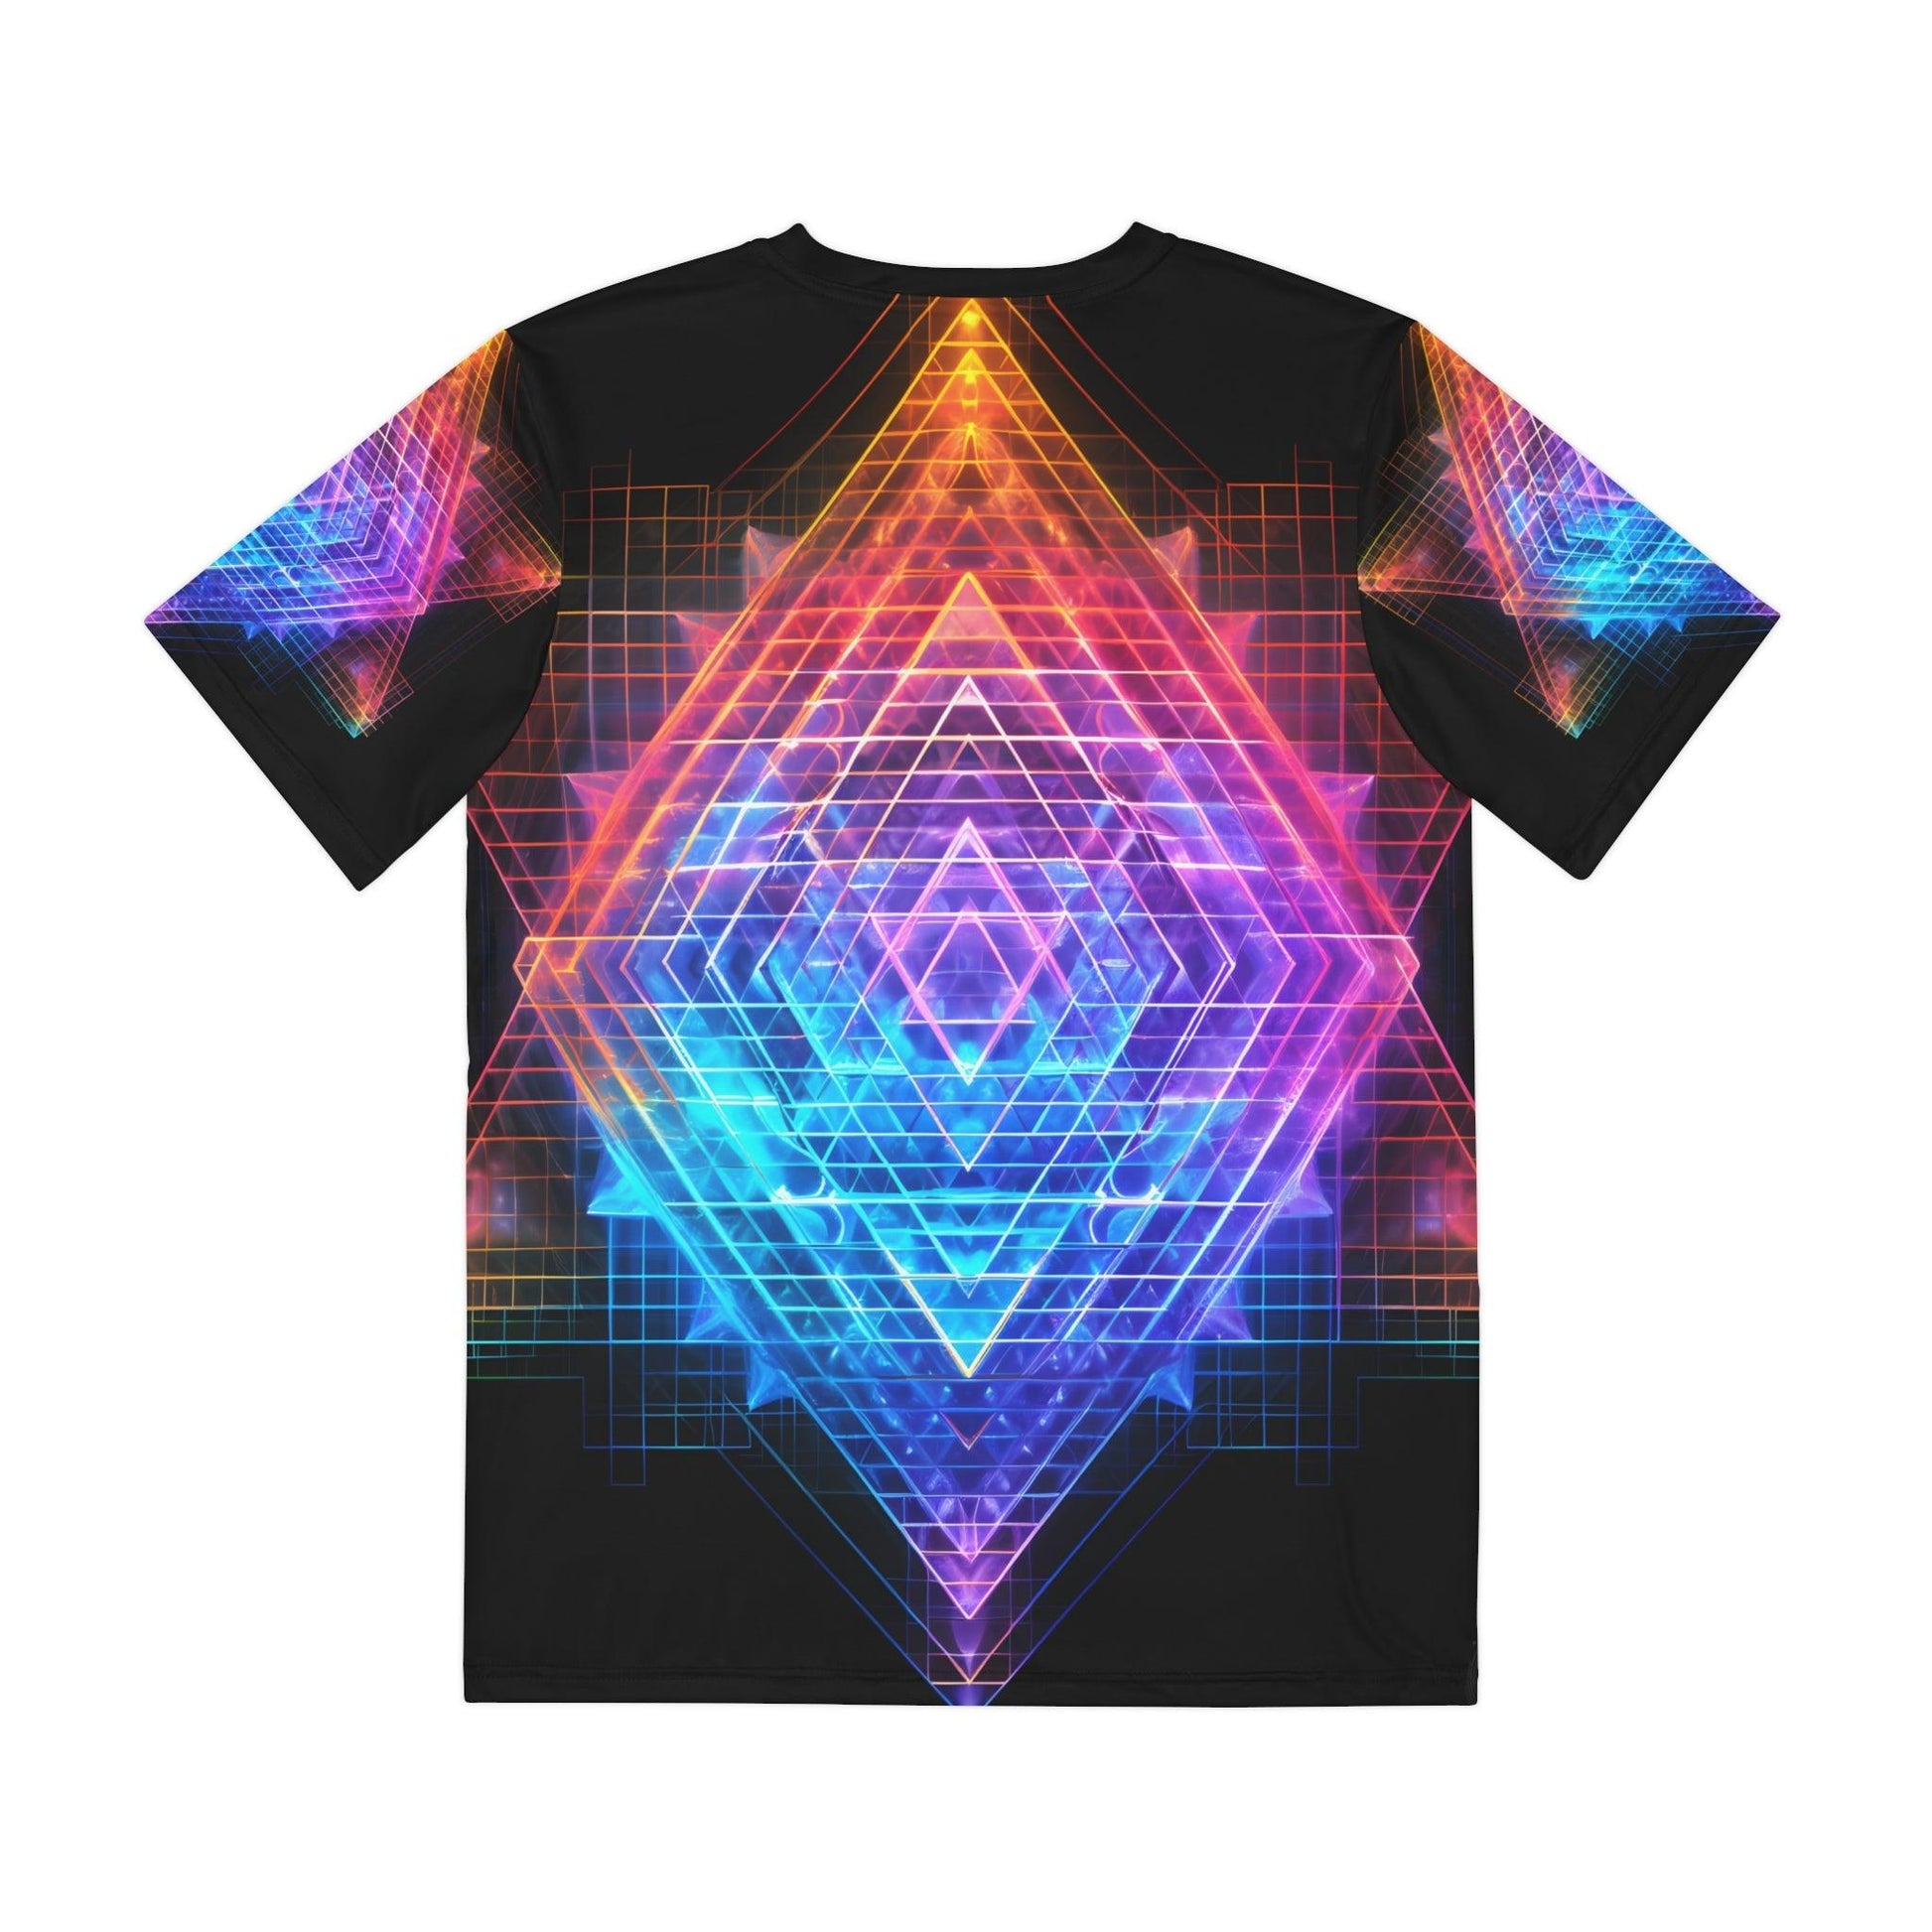 Sri Yantra 3D v2 Sacred Geometry Octane Colorful Symmetrical Sublimation - All Over Print (AOP) - Digital AI Art T-Shirt for Street or Festival Wear - Alchemystics.org